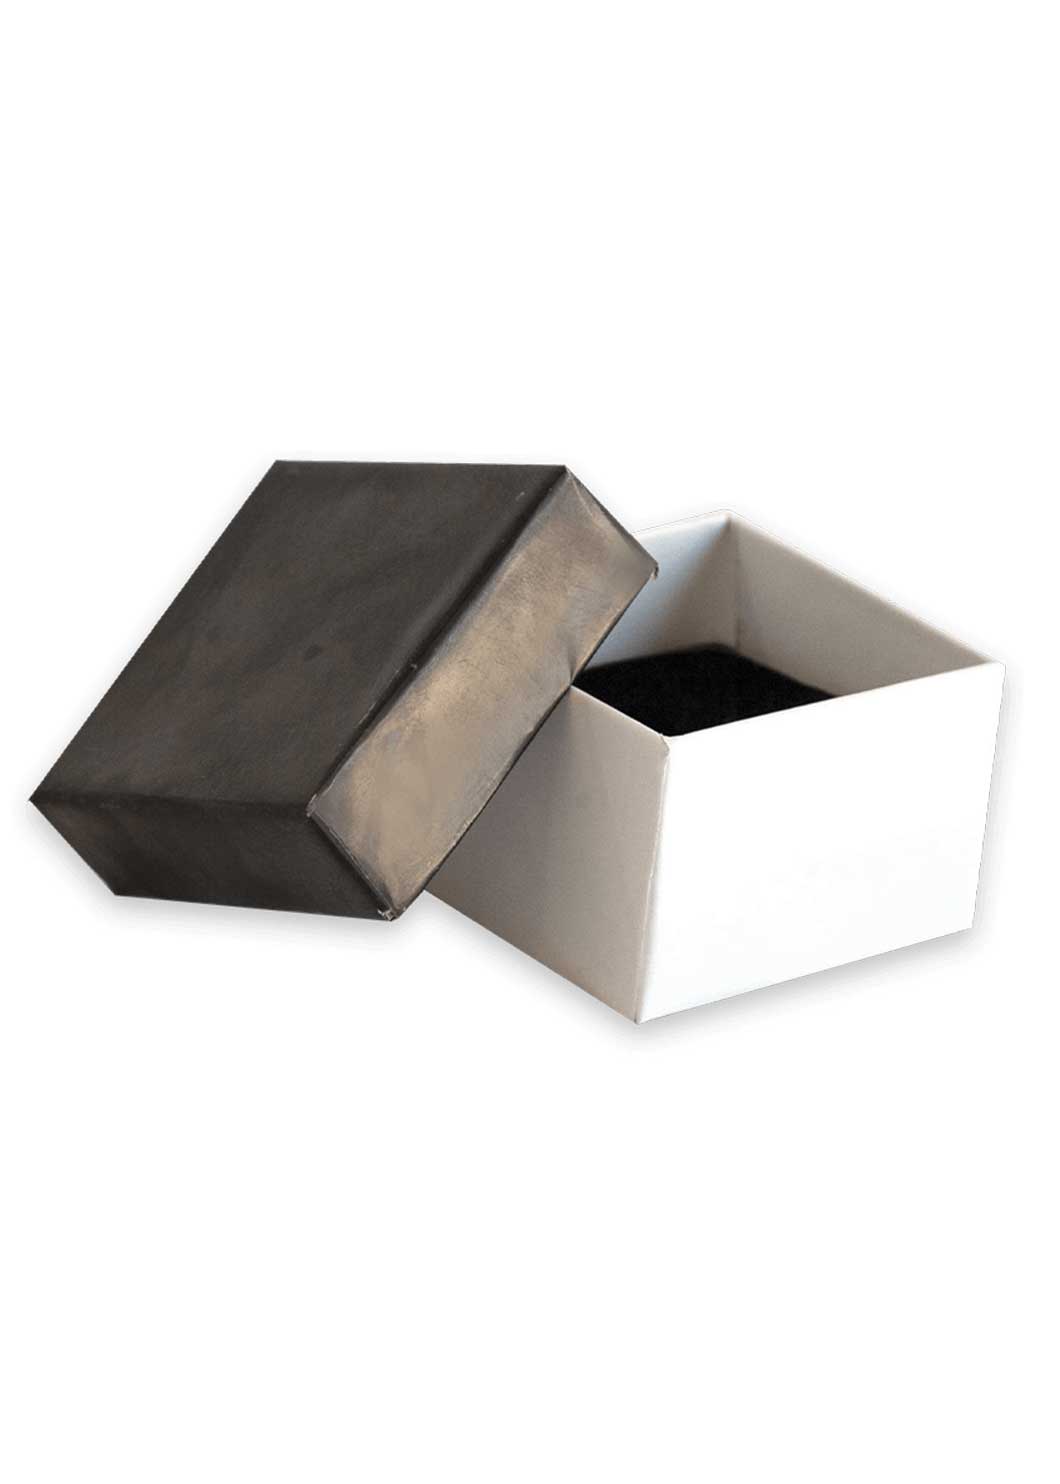 Plain Black Box for Ring Gift - Ring Gift Box - Black smal Box For Gifts